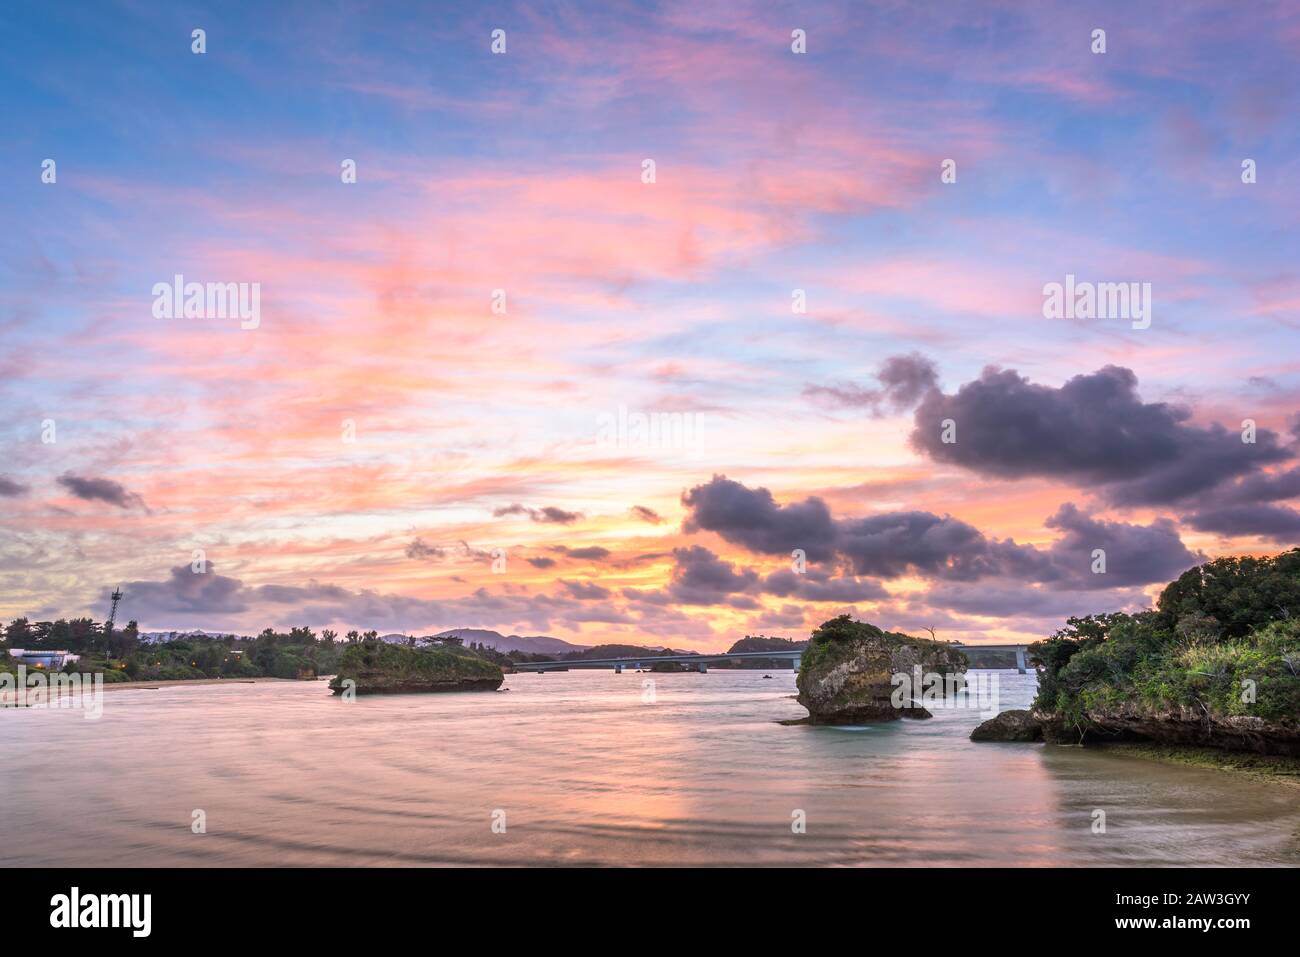 View of Kouri Island, Okinawa, Japan from Yagaji Island at dusk. Stock Photo